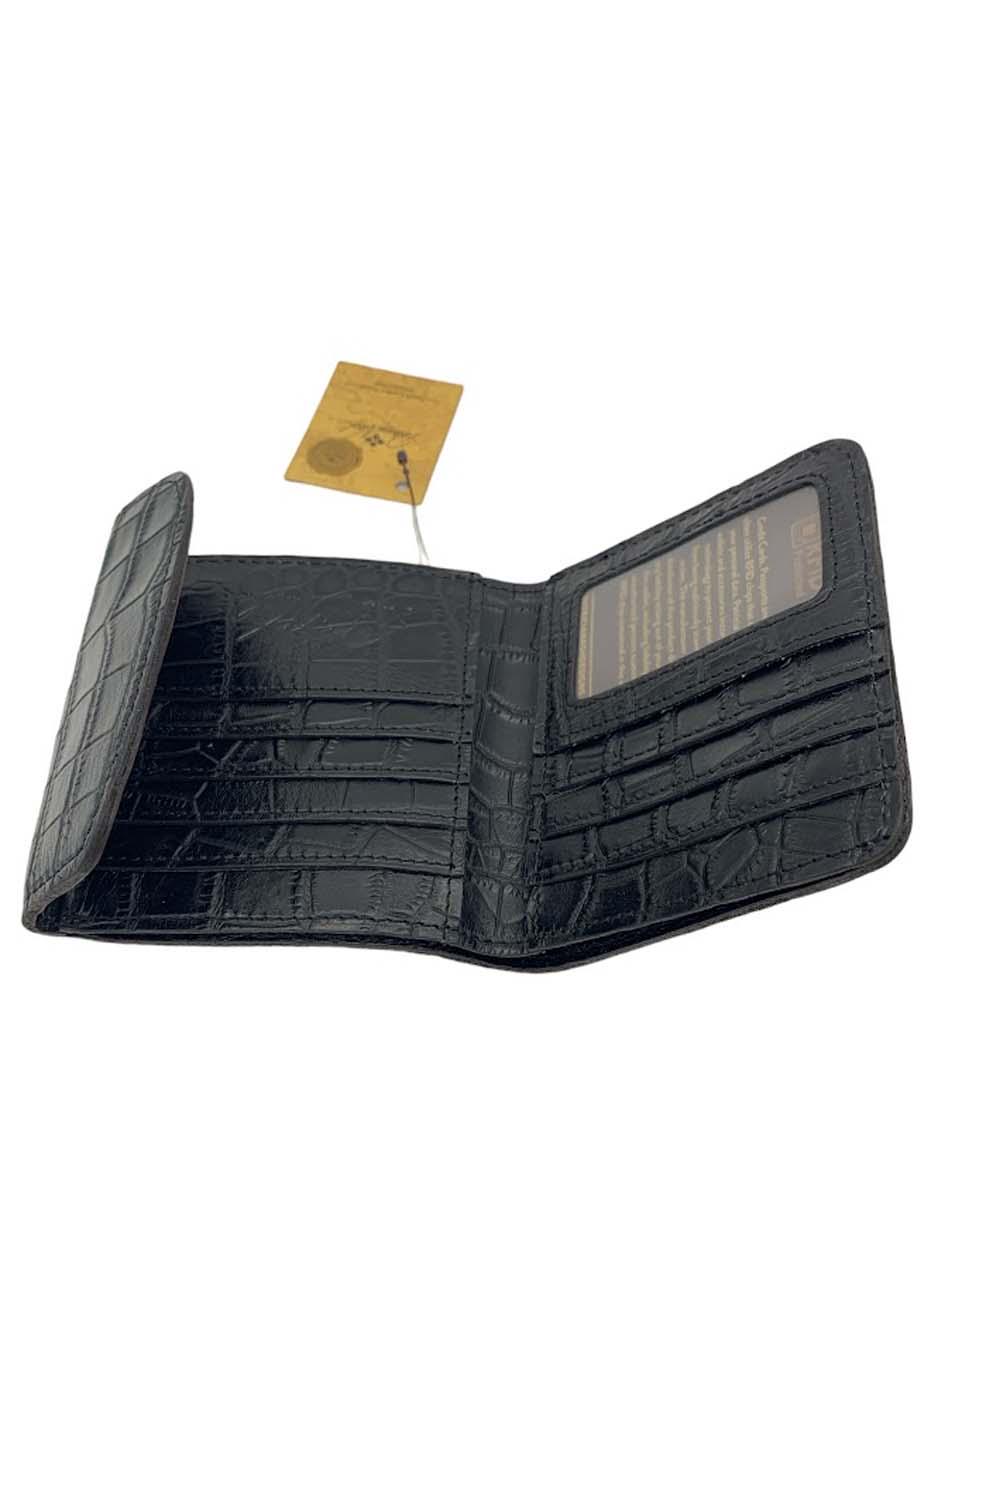 Patricia Nash Leather Reiti Bi-Fold Wallet Plum